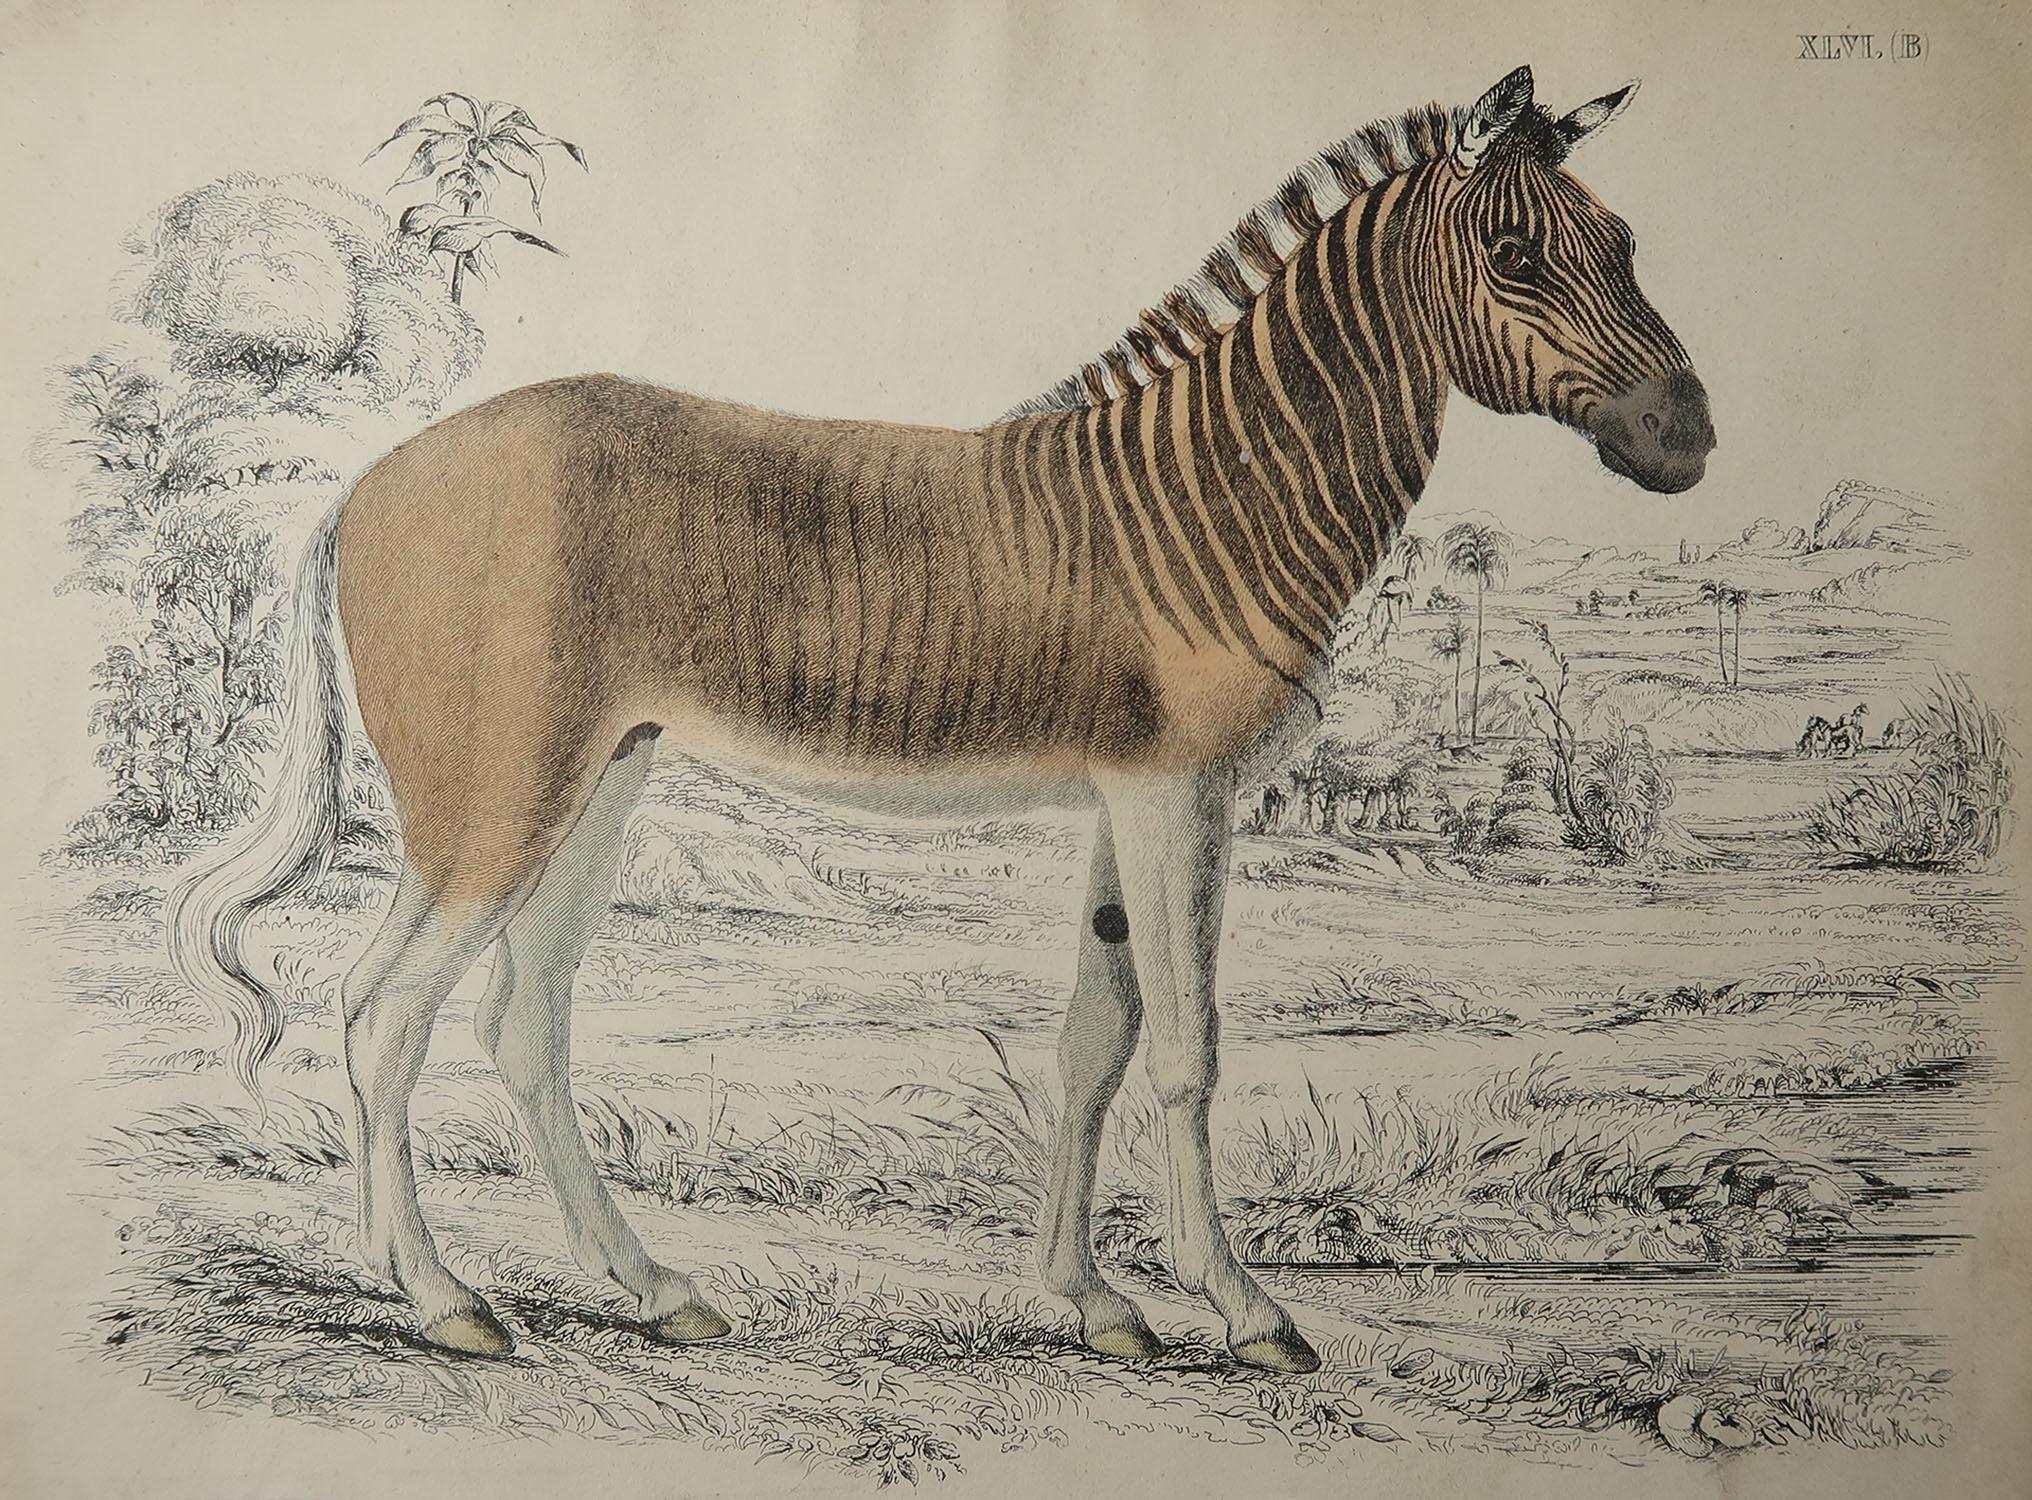 Folk Art Original Antique Print of a Zebra, C.1835. 'Unframed'